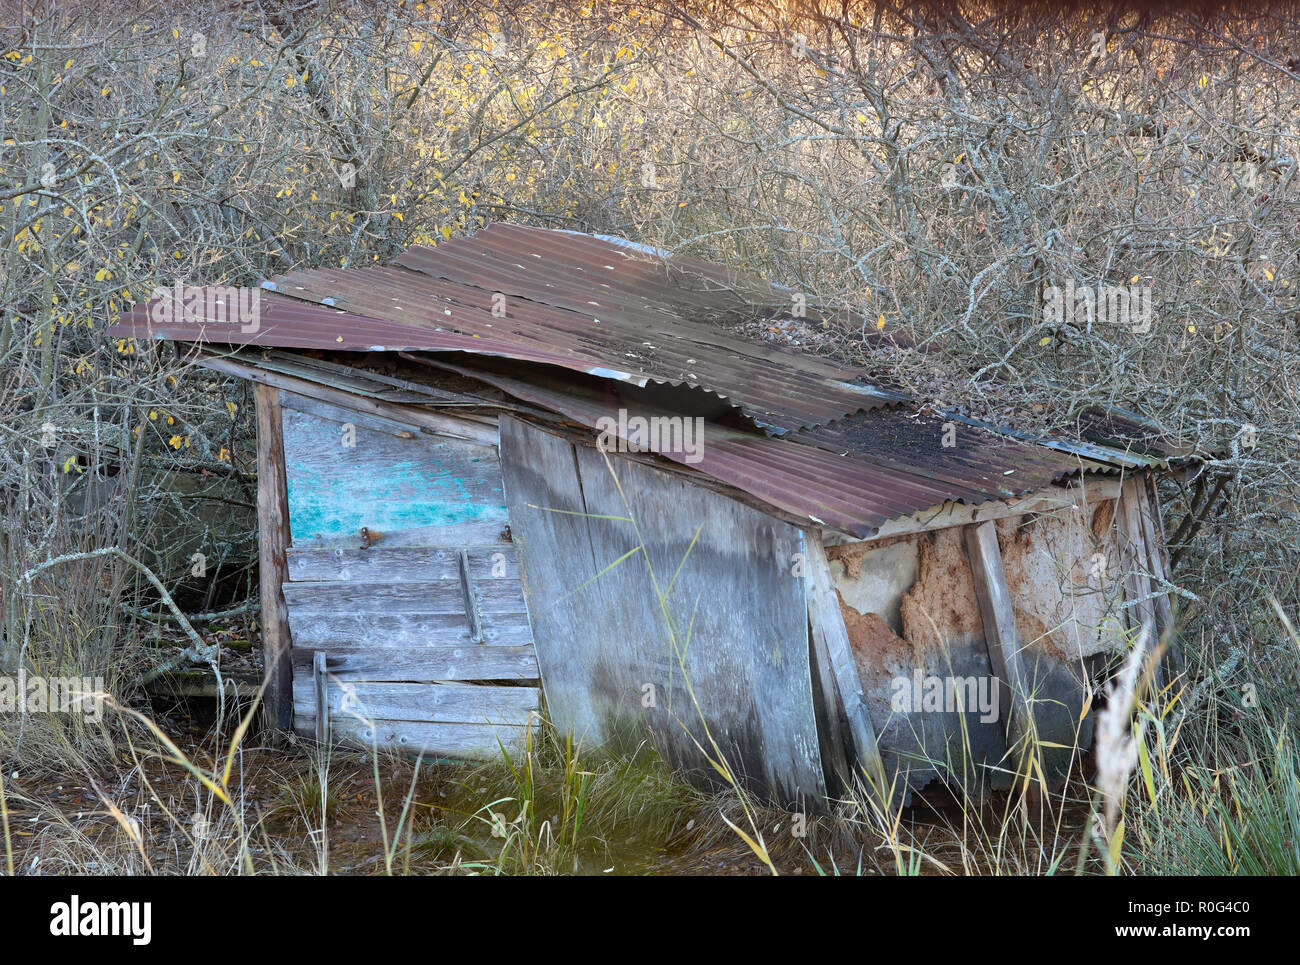 Old, desolate barn that is falling apart in Sandviken, Bogesundslandet, near Vaxholm, Sweden Stock Photo